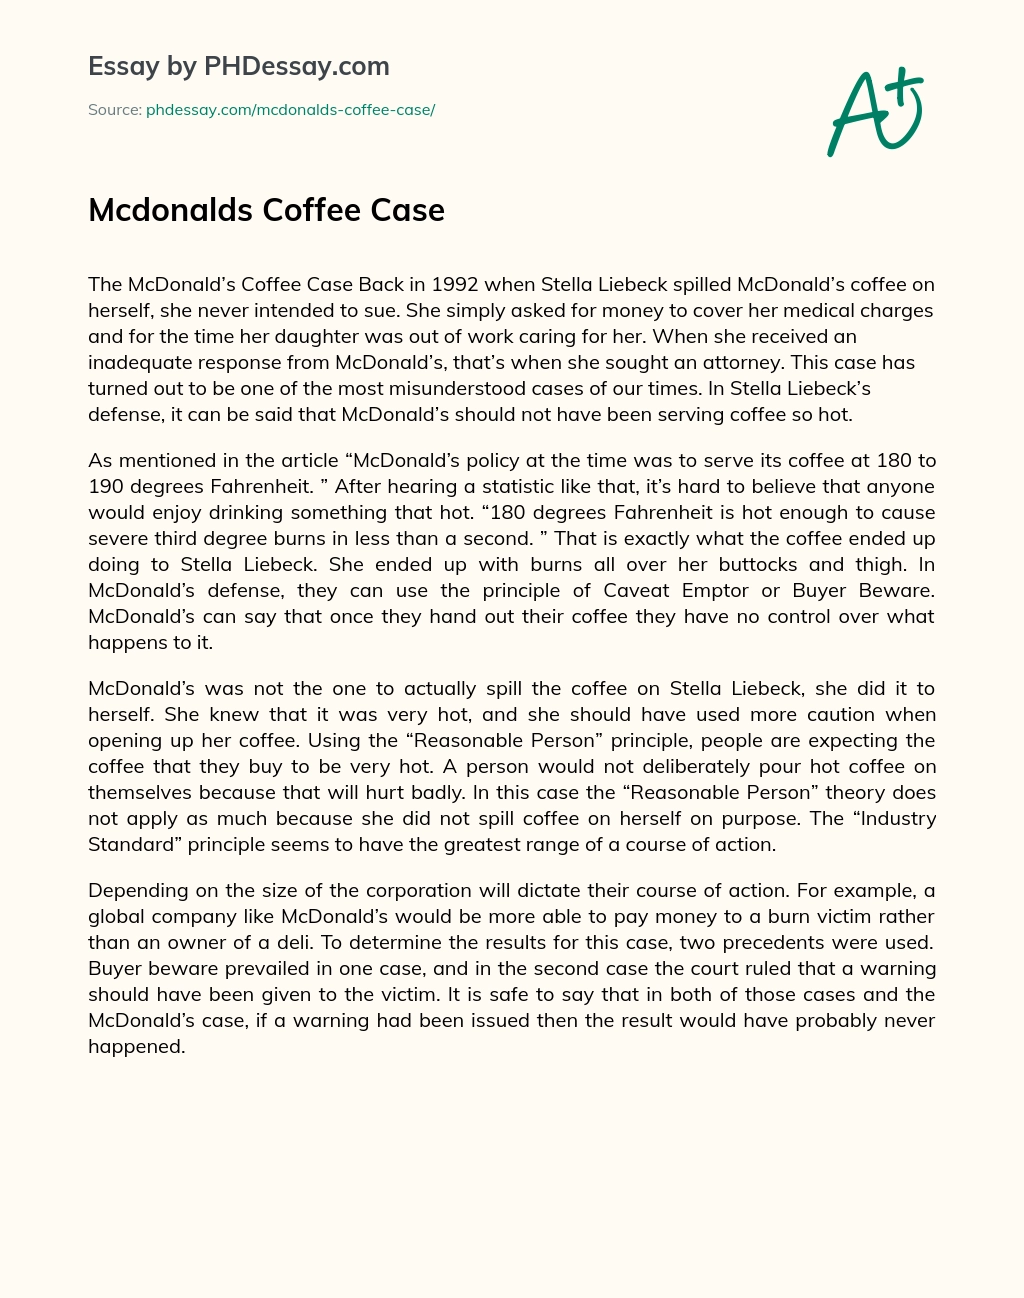 Mcdonalds Coffee Case essay